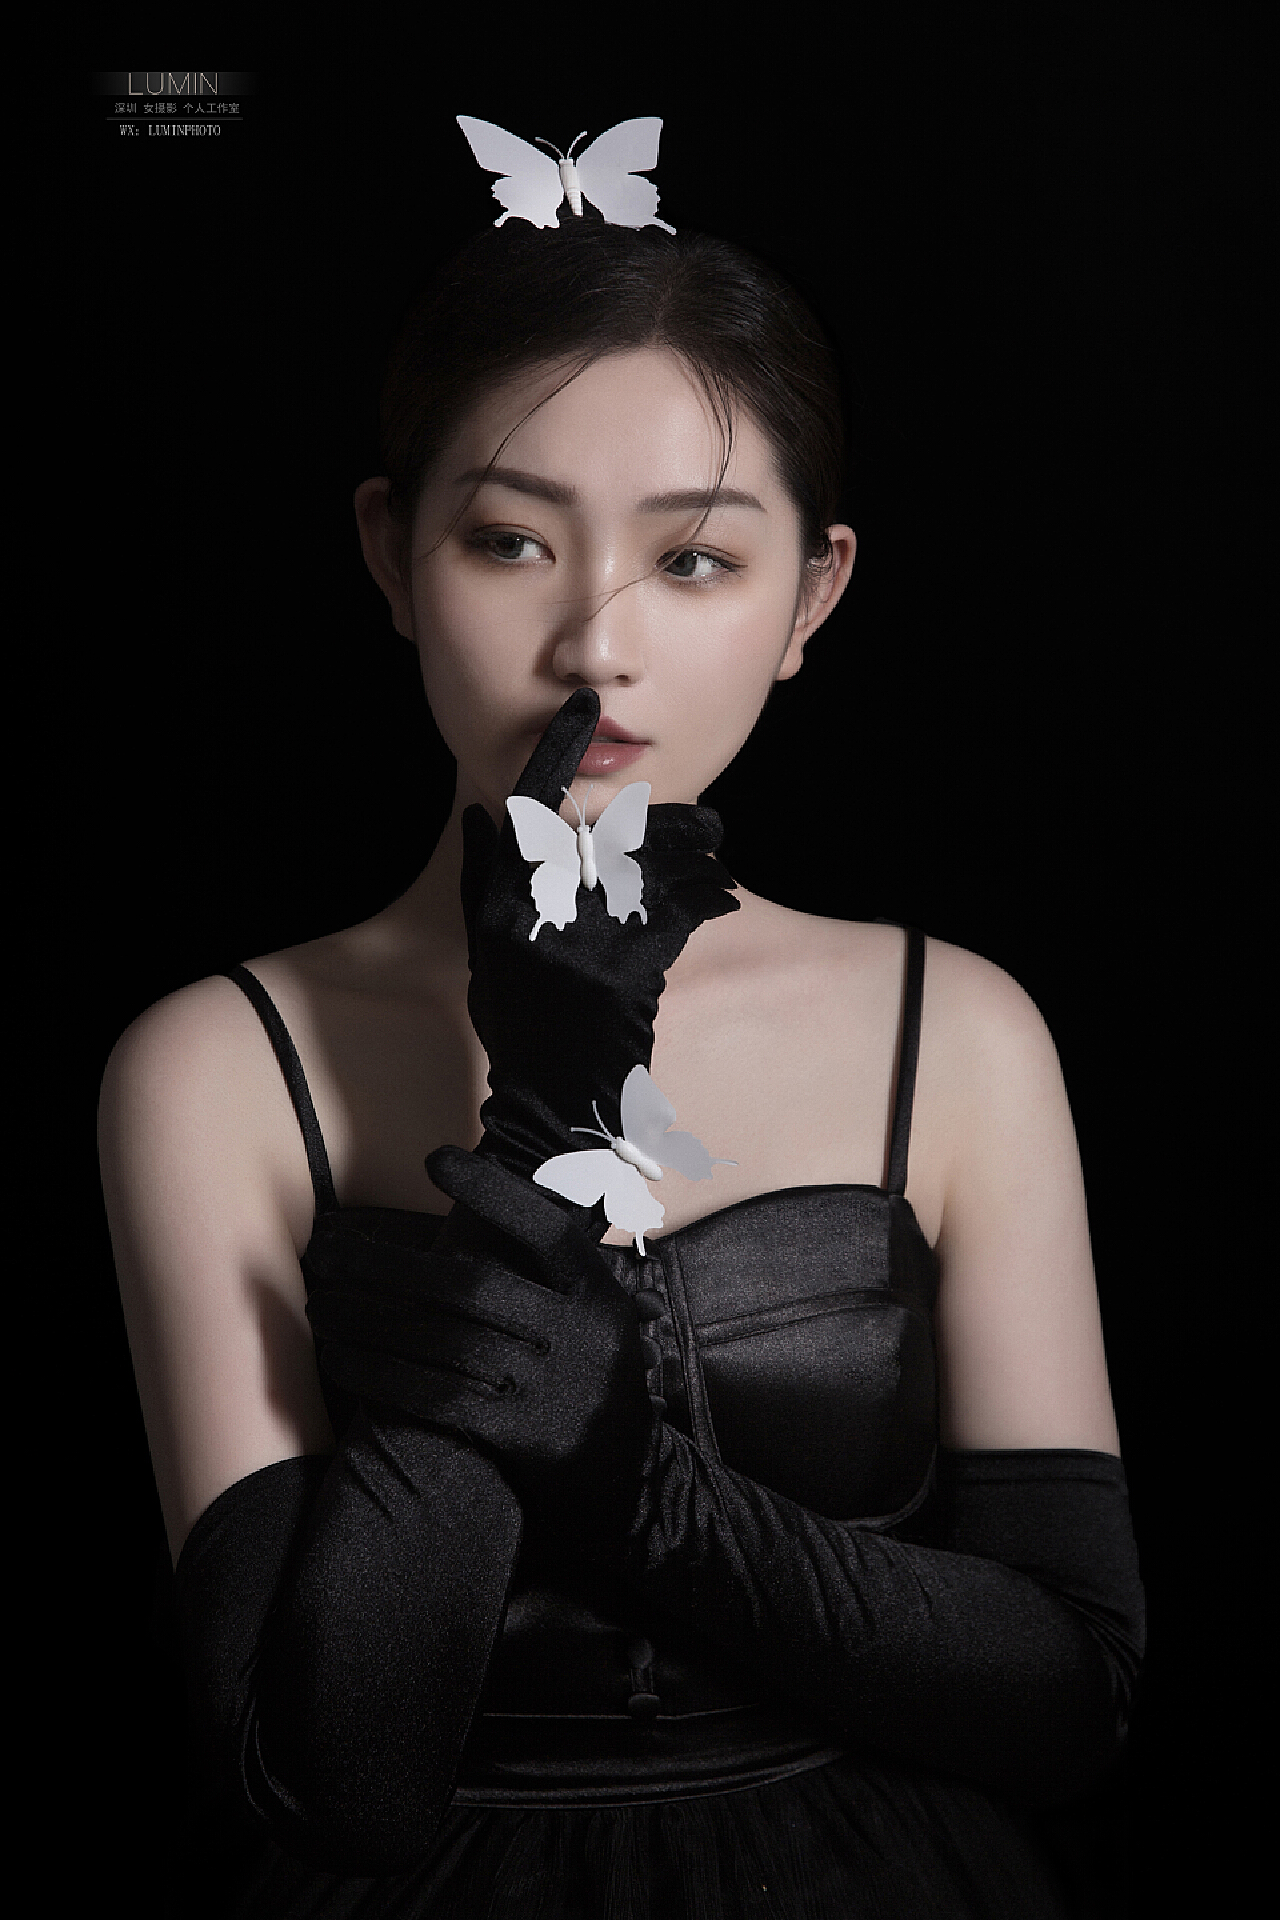 ShiniUni 黑色婚纱系列 - ShiniUni婚纱礼服高级定制设计 - 设计师品牌